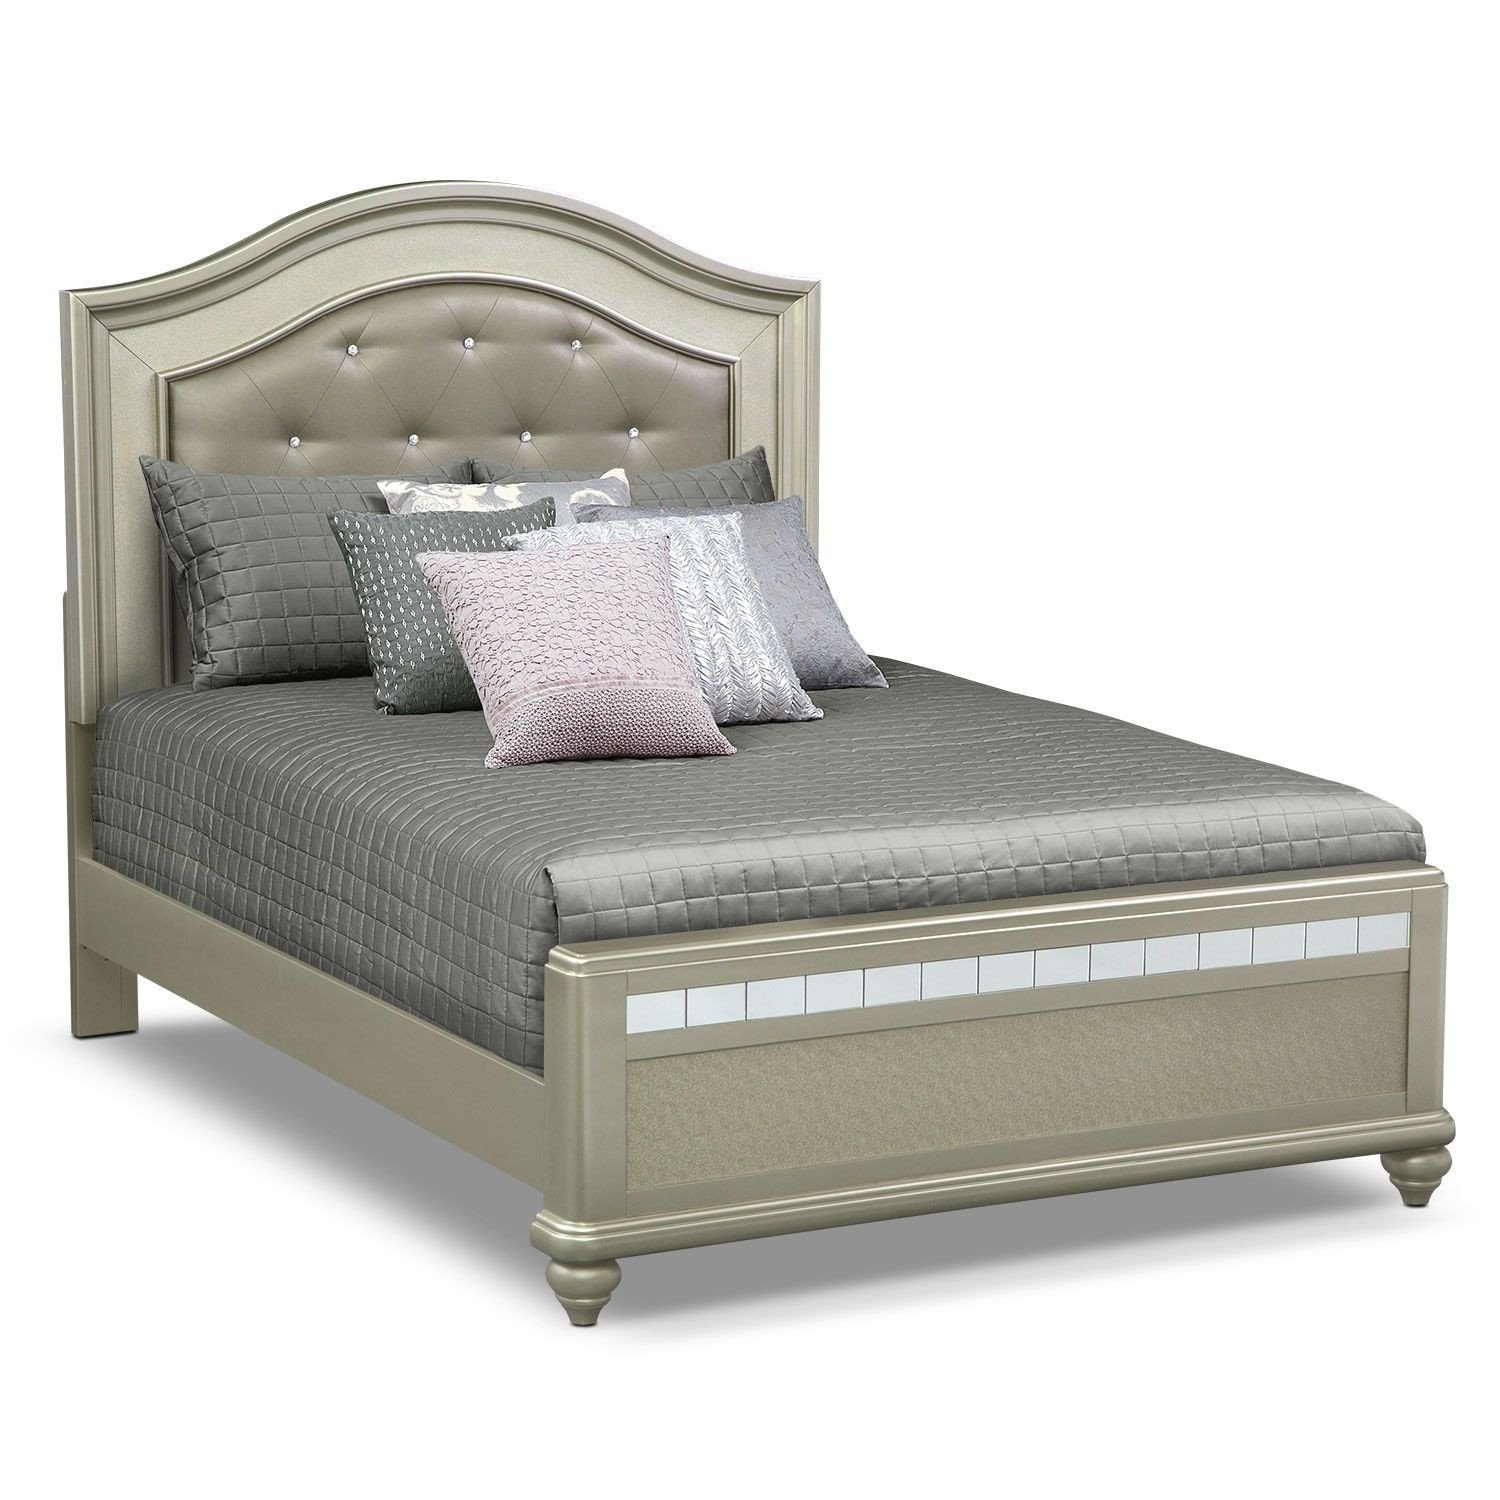 Value City Bedroom Set Fresh Serena Queen Bed Platinum